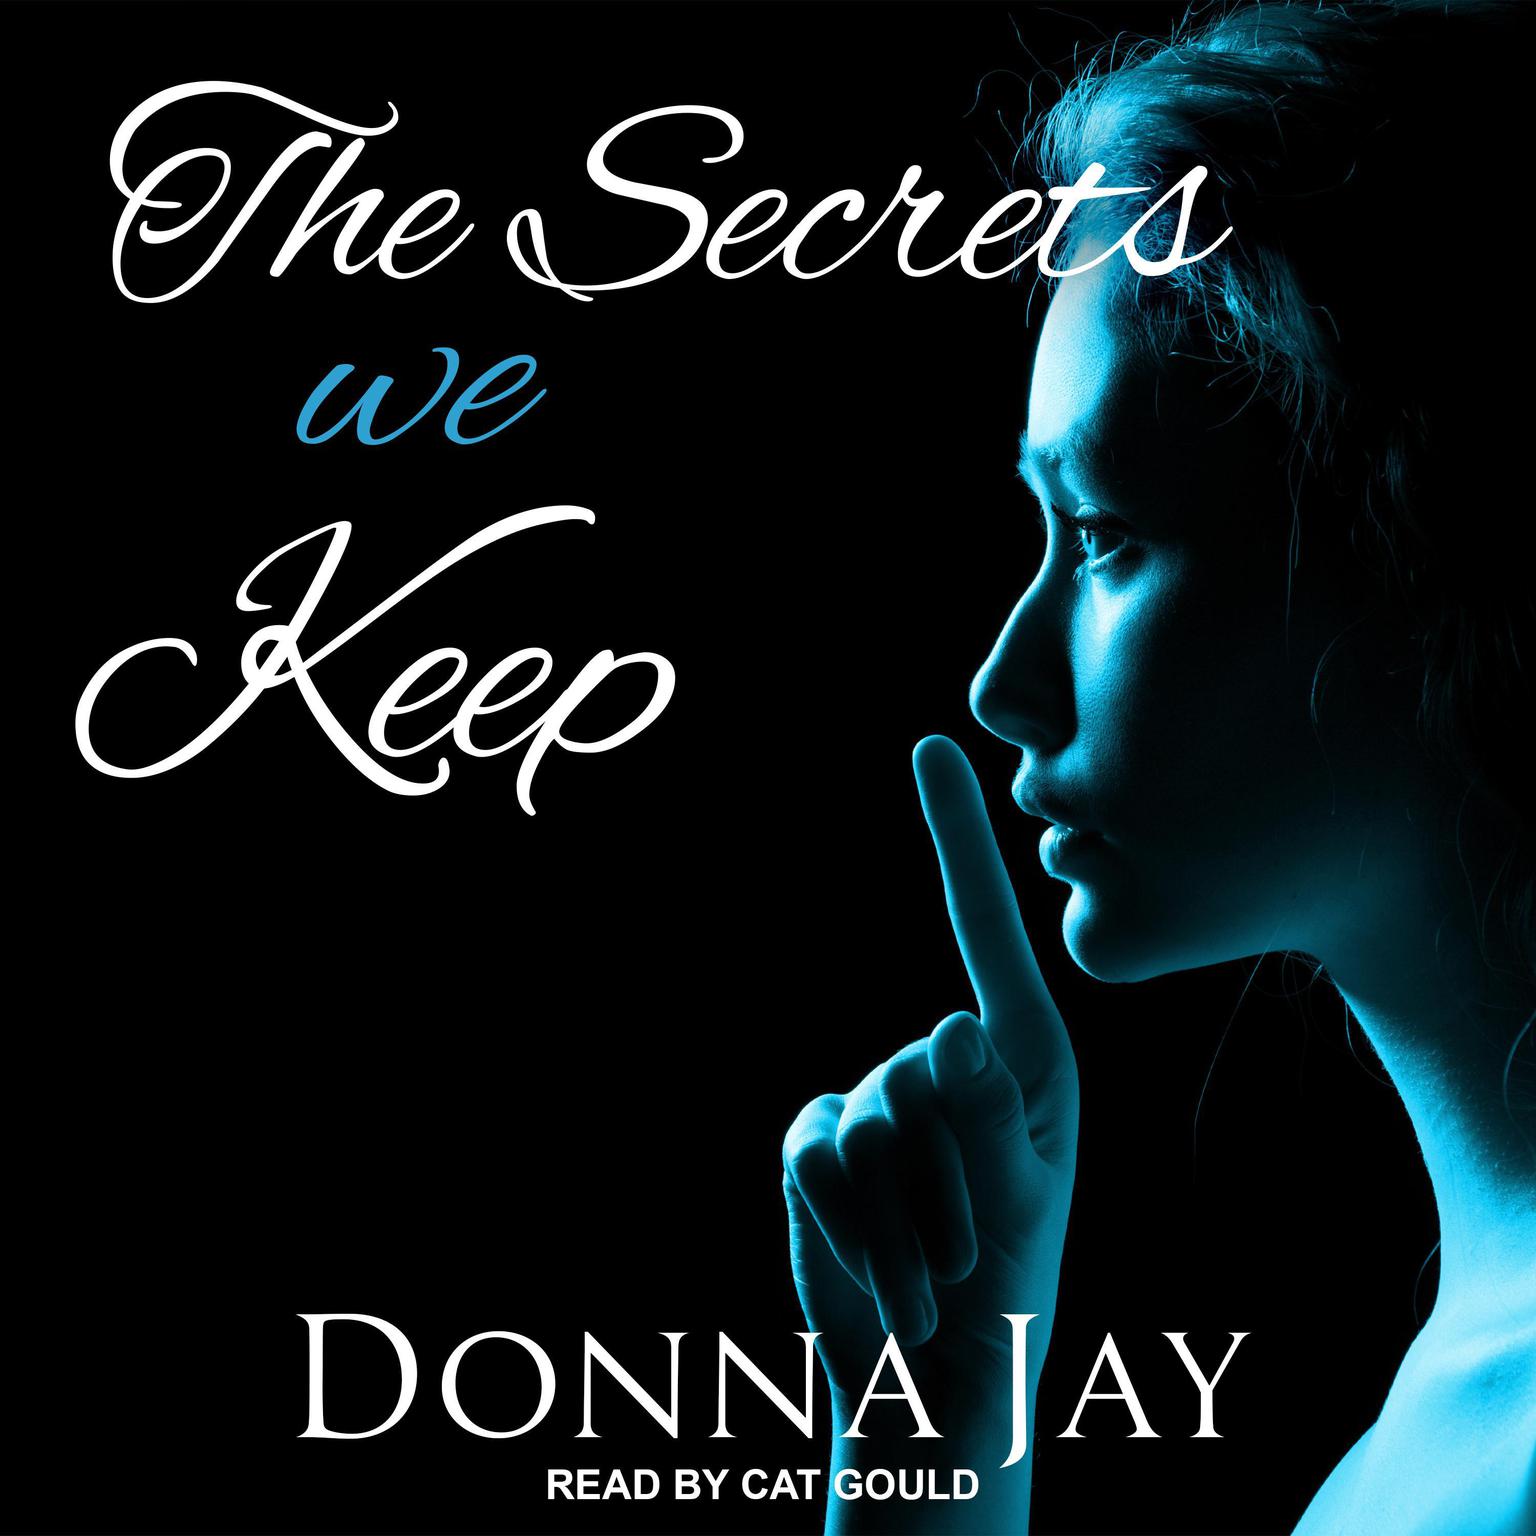 Cat Gould, Donna Jay: The Secrets We Keep (AudiobookFormat, 2021, self)